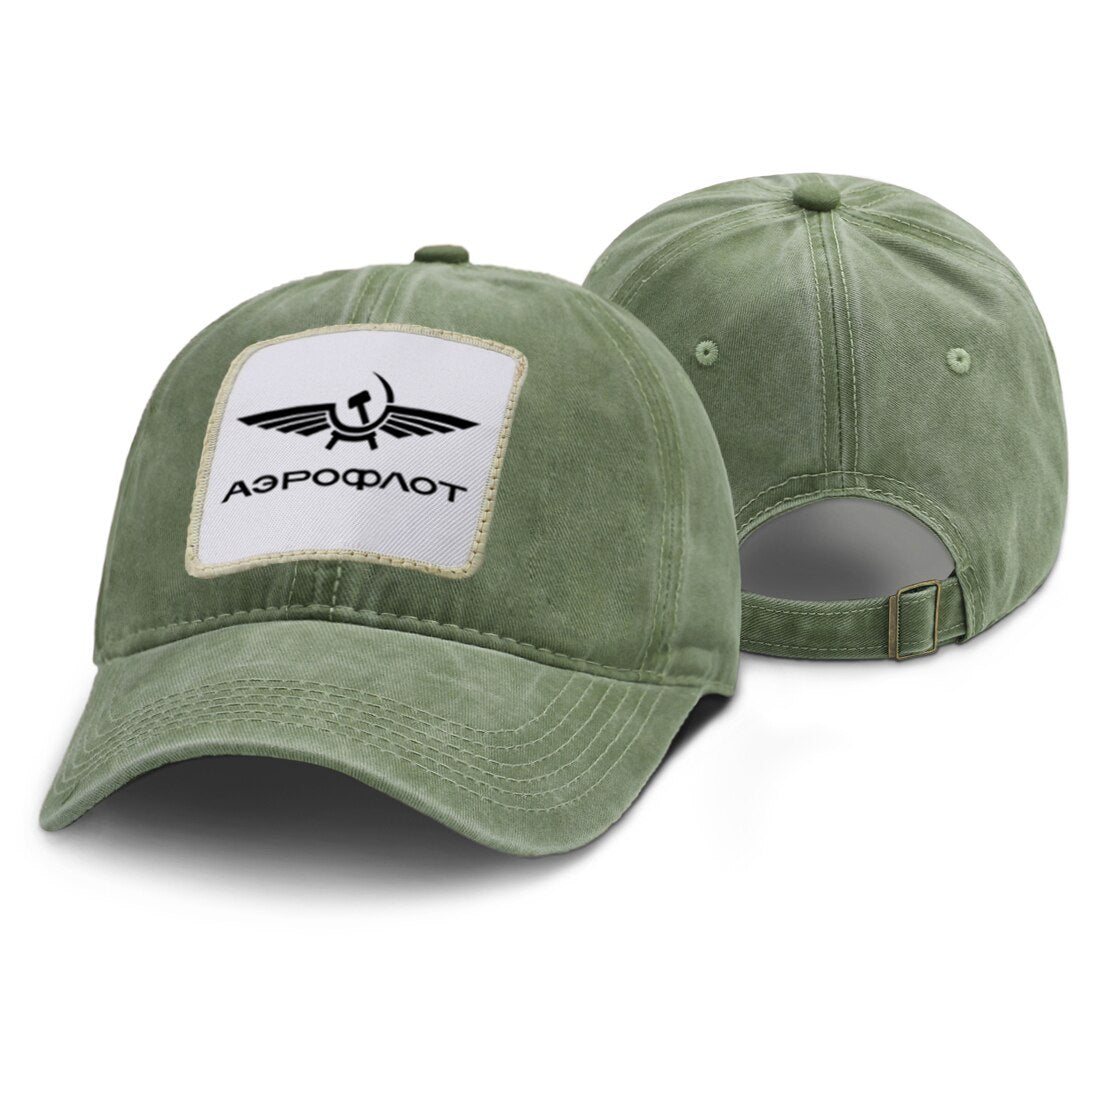 Baseball Caps Summer Snapback Hats Aeroflot CCCP Civil Aviation Ussr Russia Airforce Trucker Caps Adjustable Hip Hop Kpop Hats